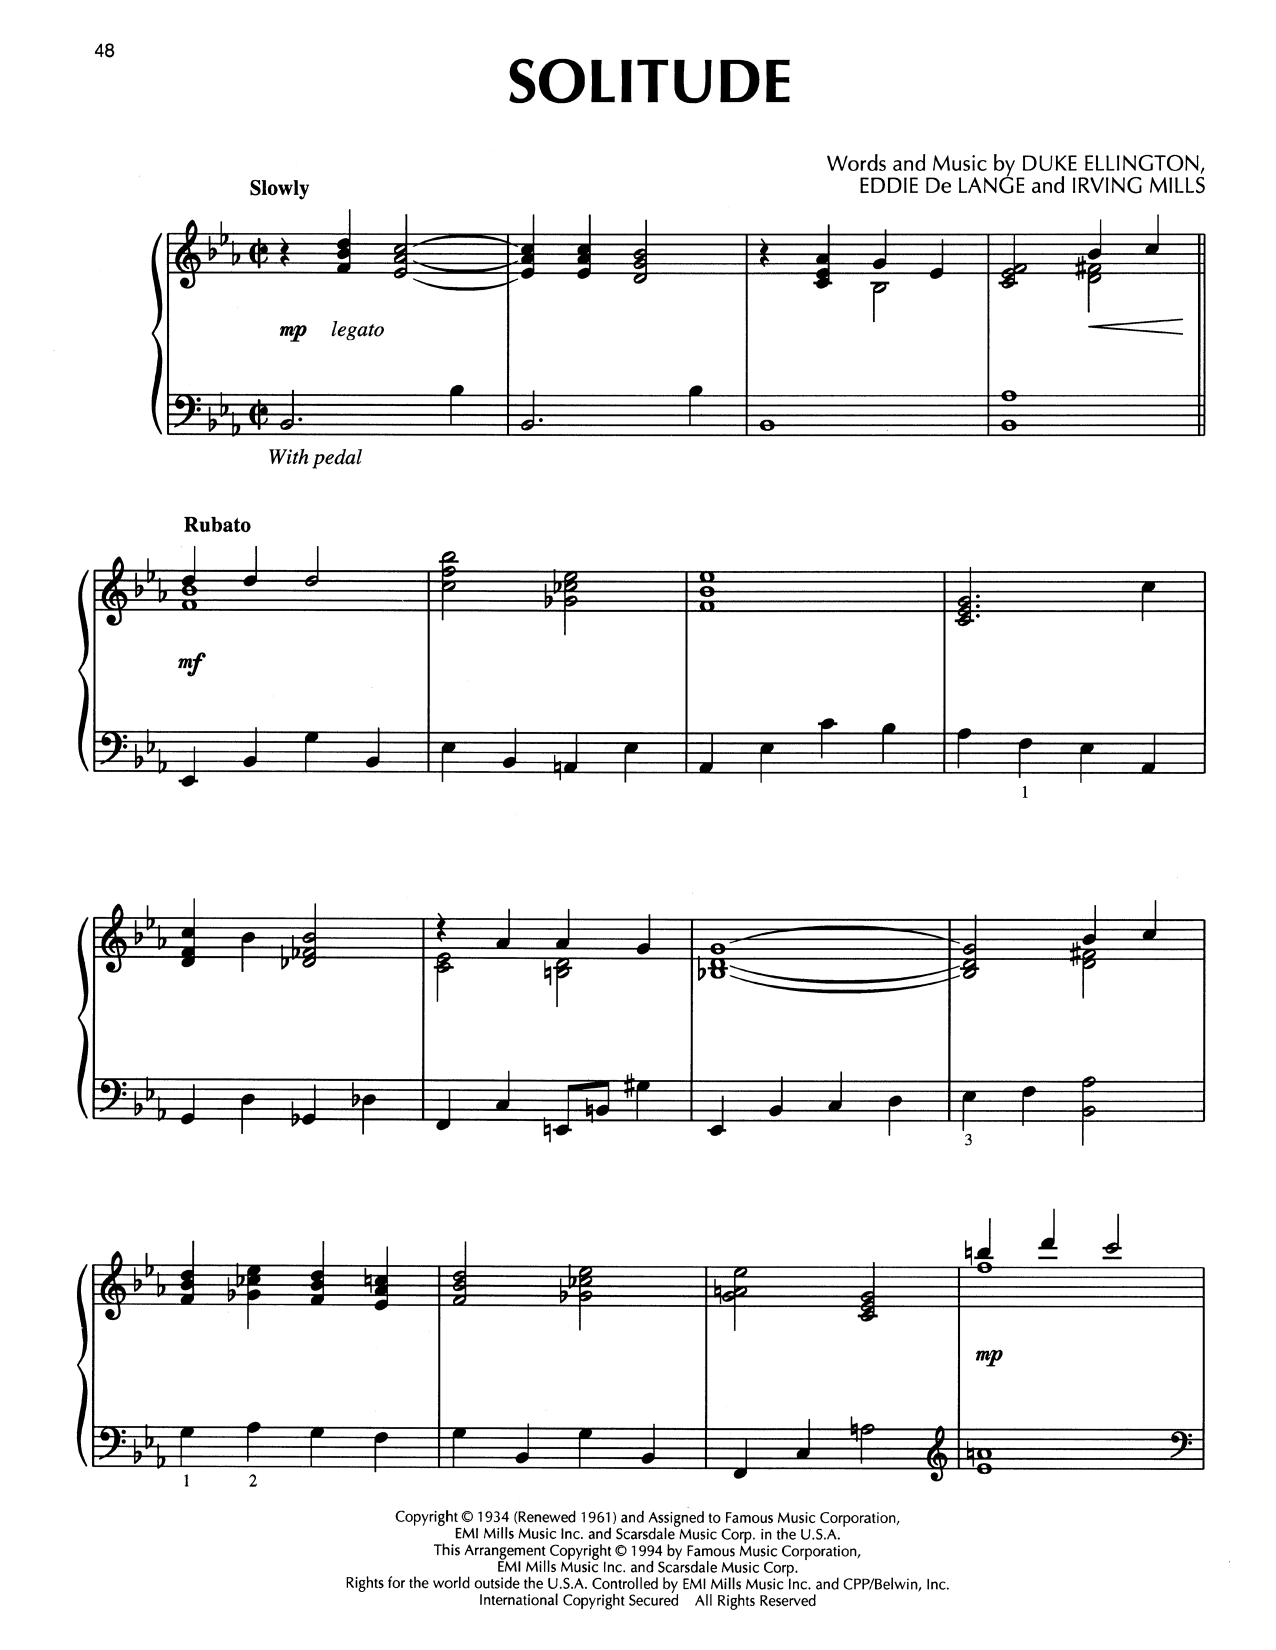 Duke Ellington Solitude (arr. Bill Boyd) Sheet Music Notes & Chords for Piano Solo - Download or Print PDF